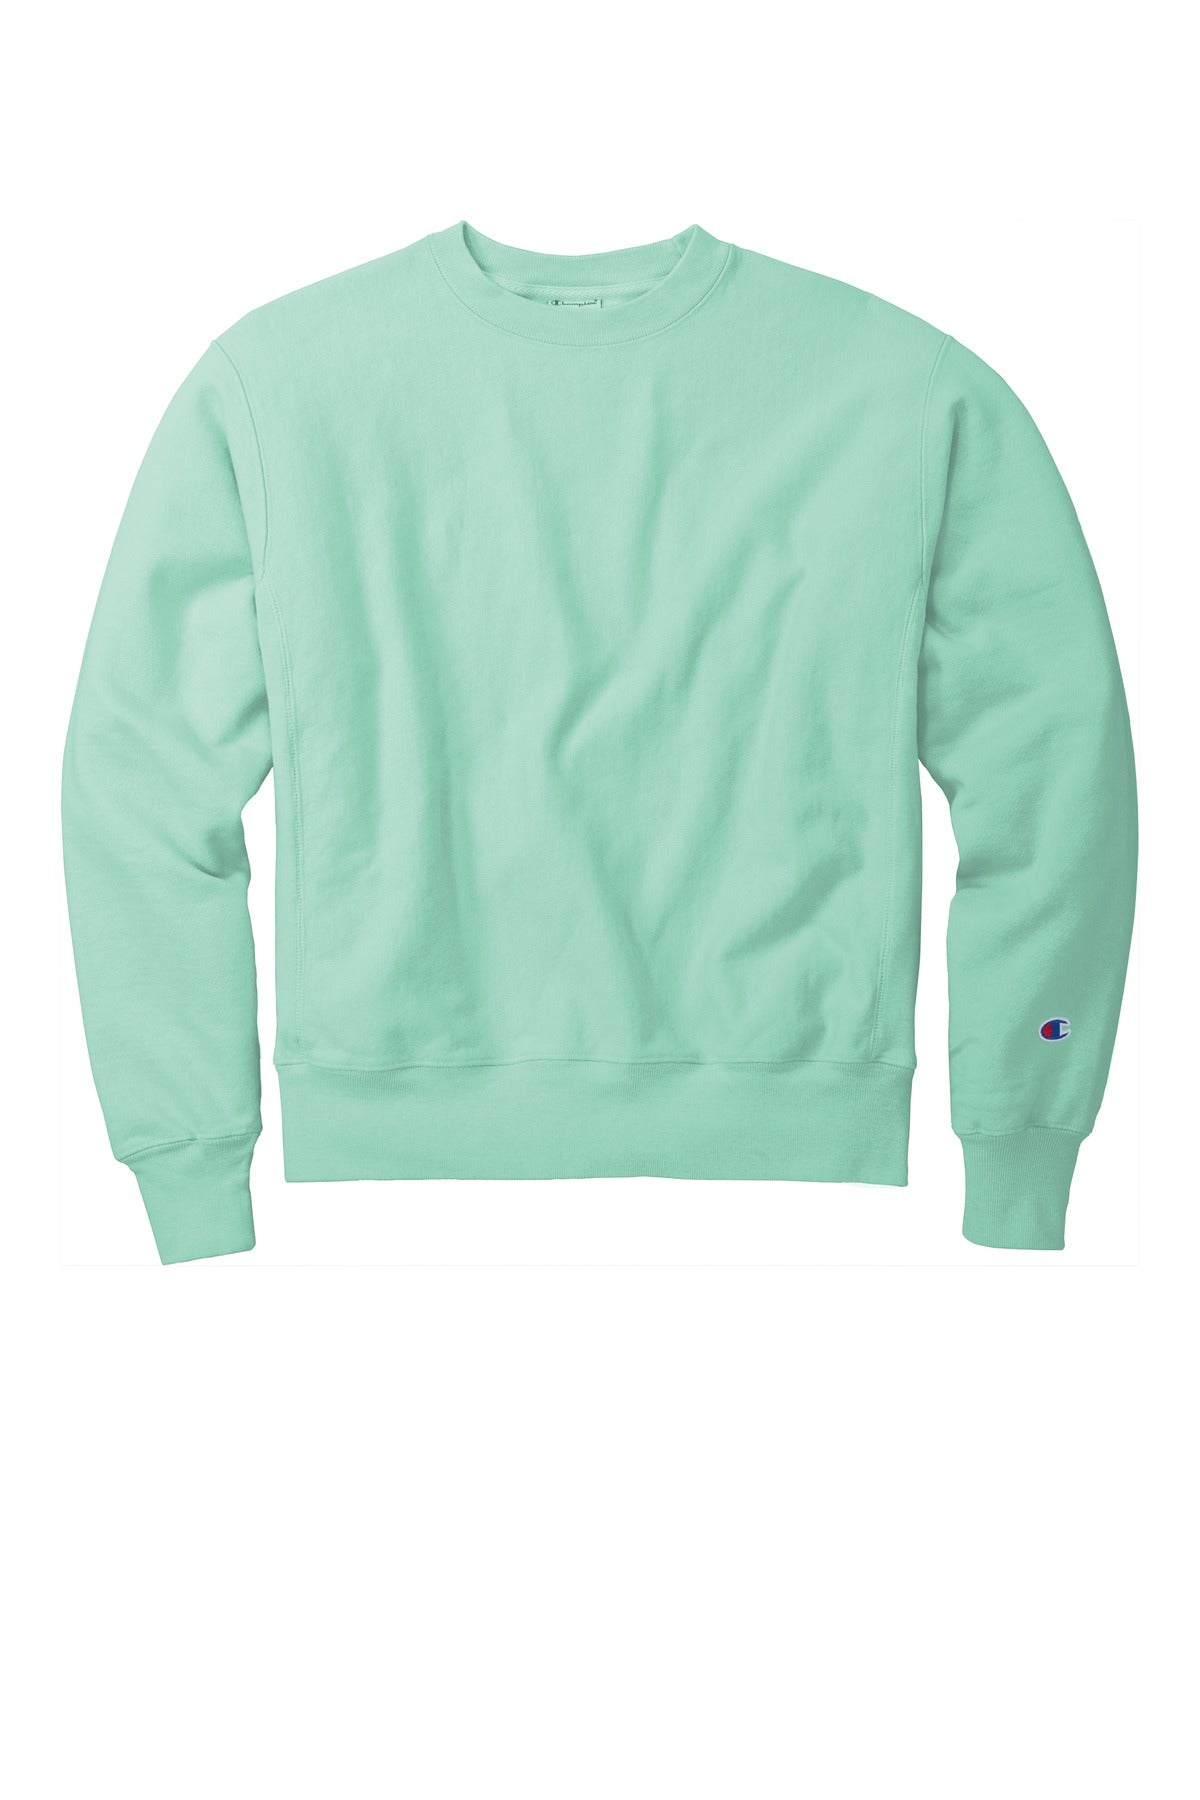 Champion Reverse Weave Garment-Dyed Crewneck Sweatshirt. GDS149